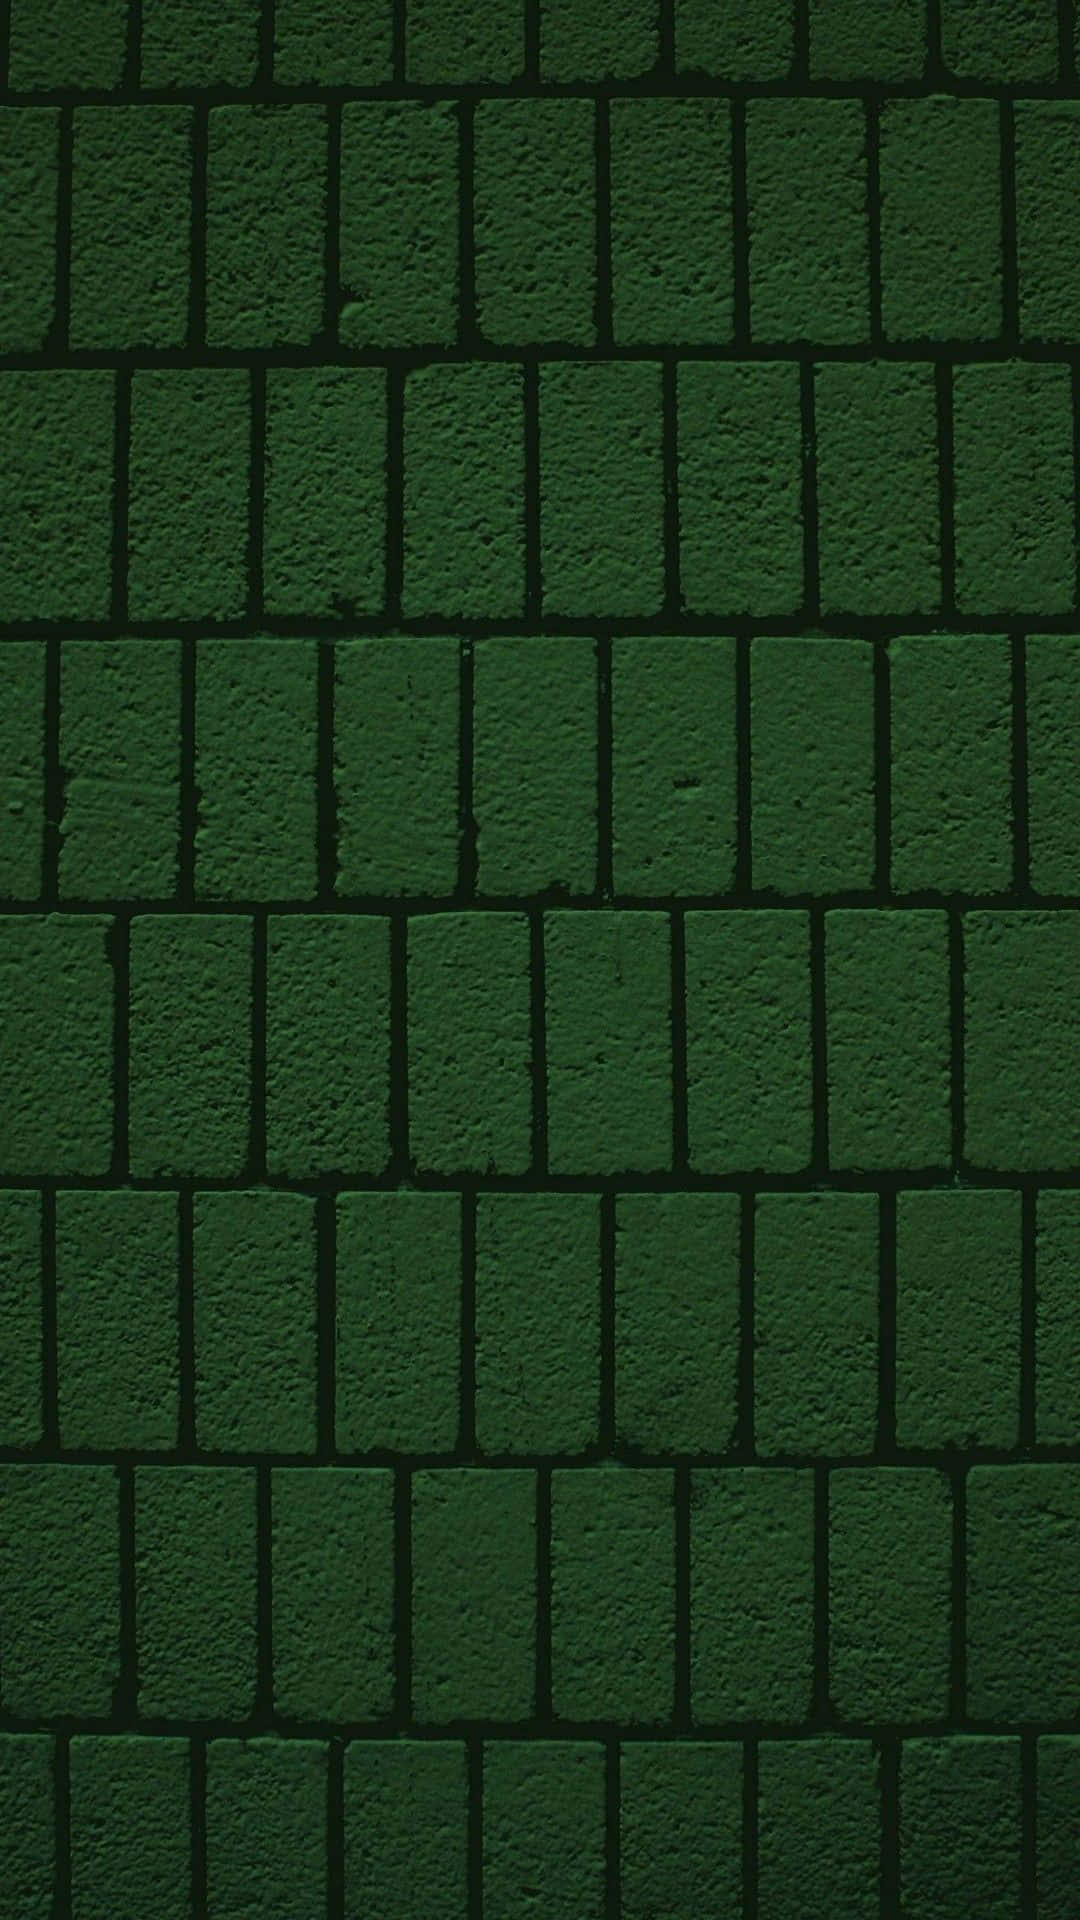 Brick Wall Dark Green iPhone Wallpaper